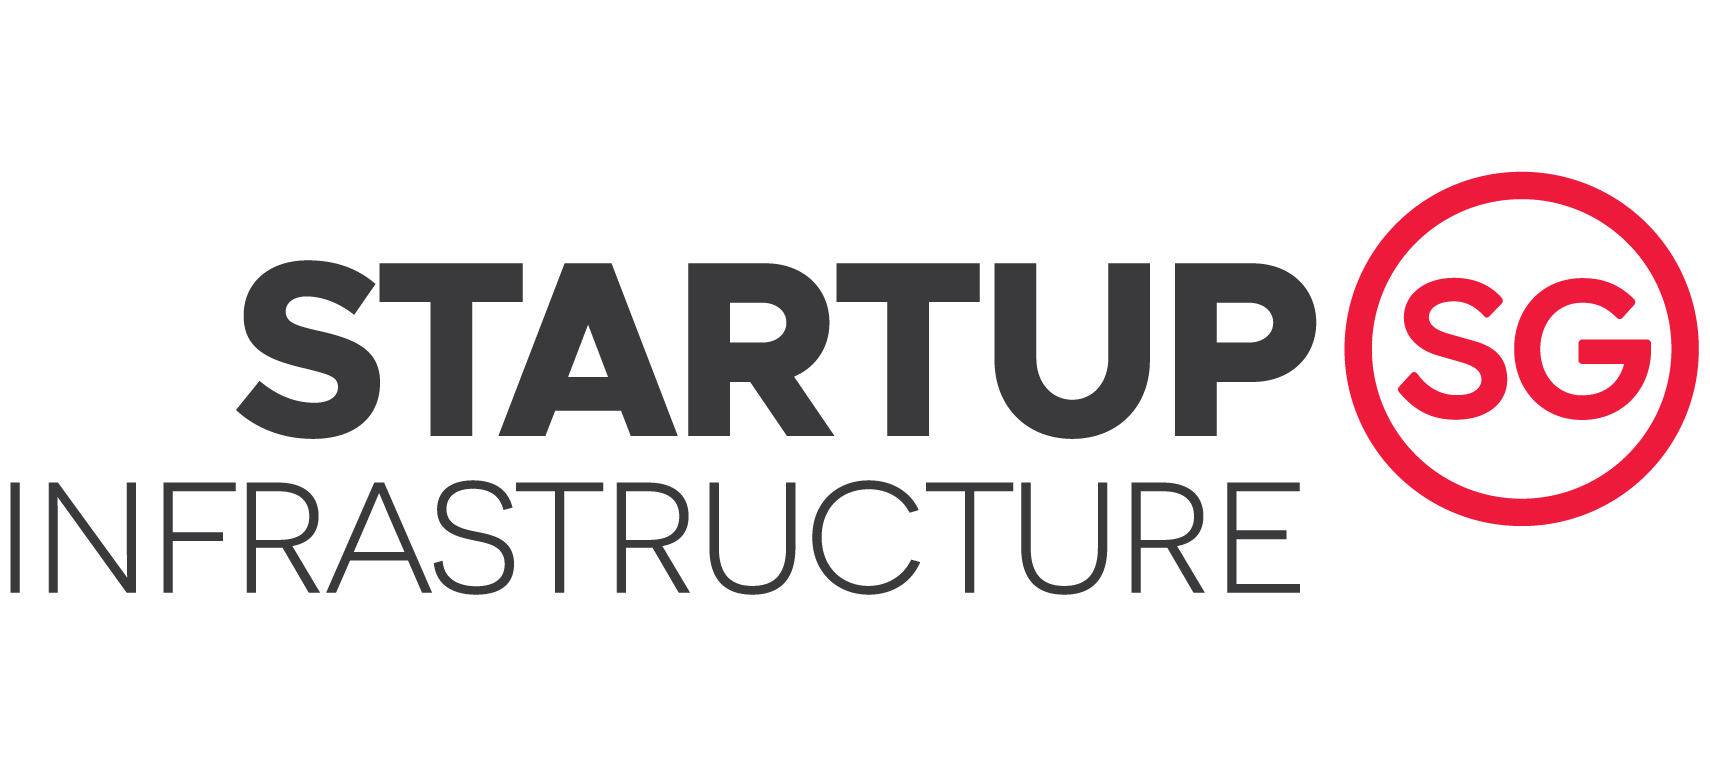 Startup SG Infrastructure